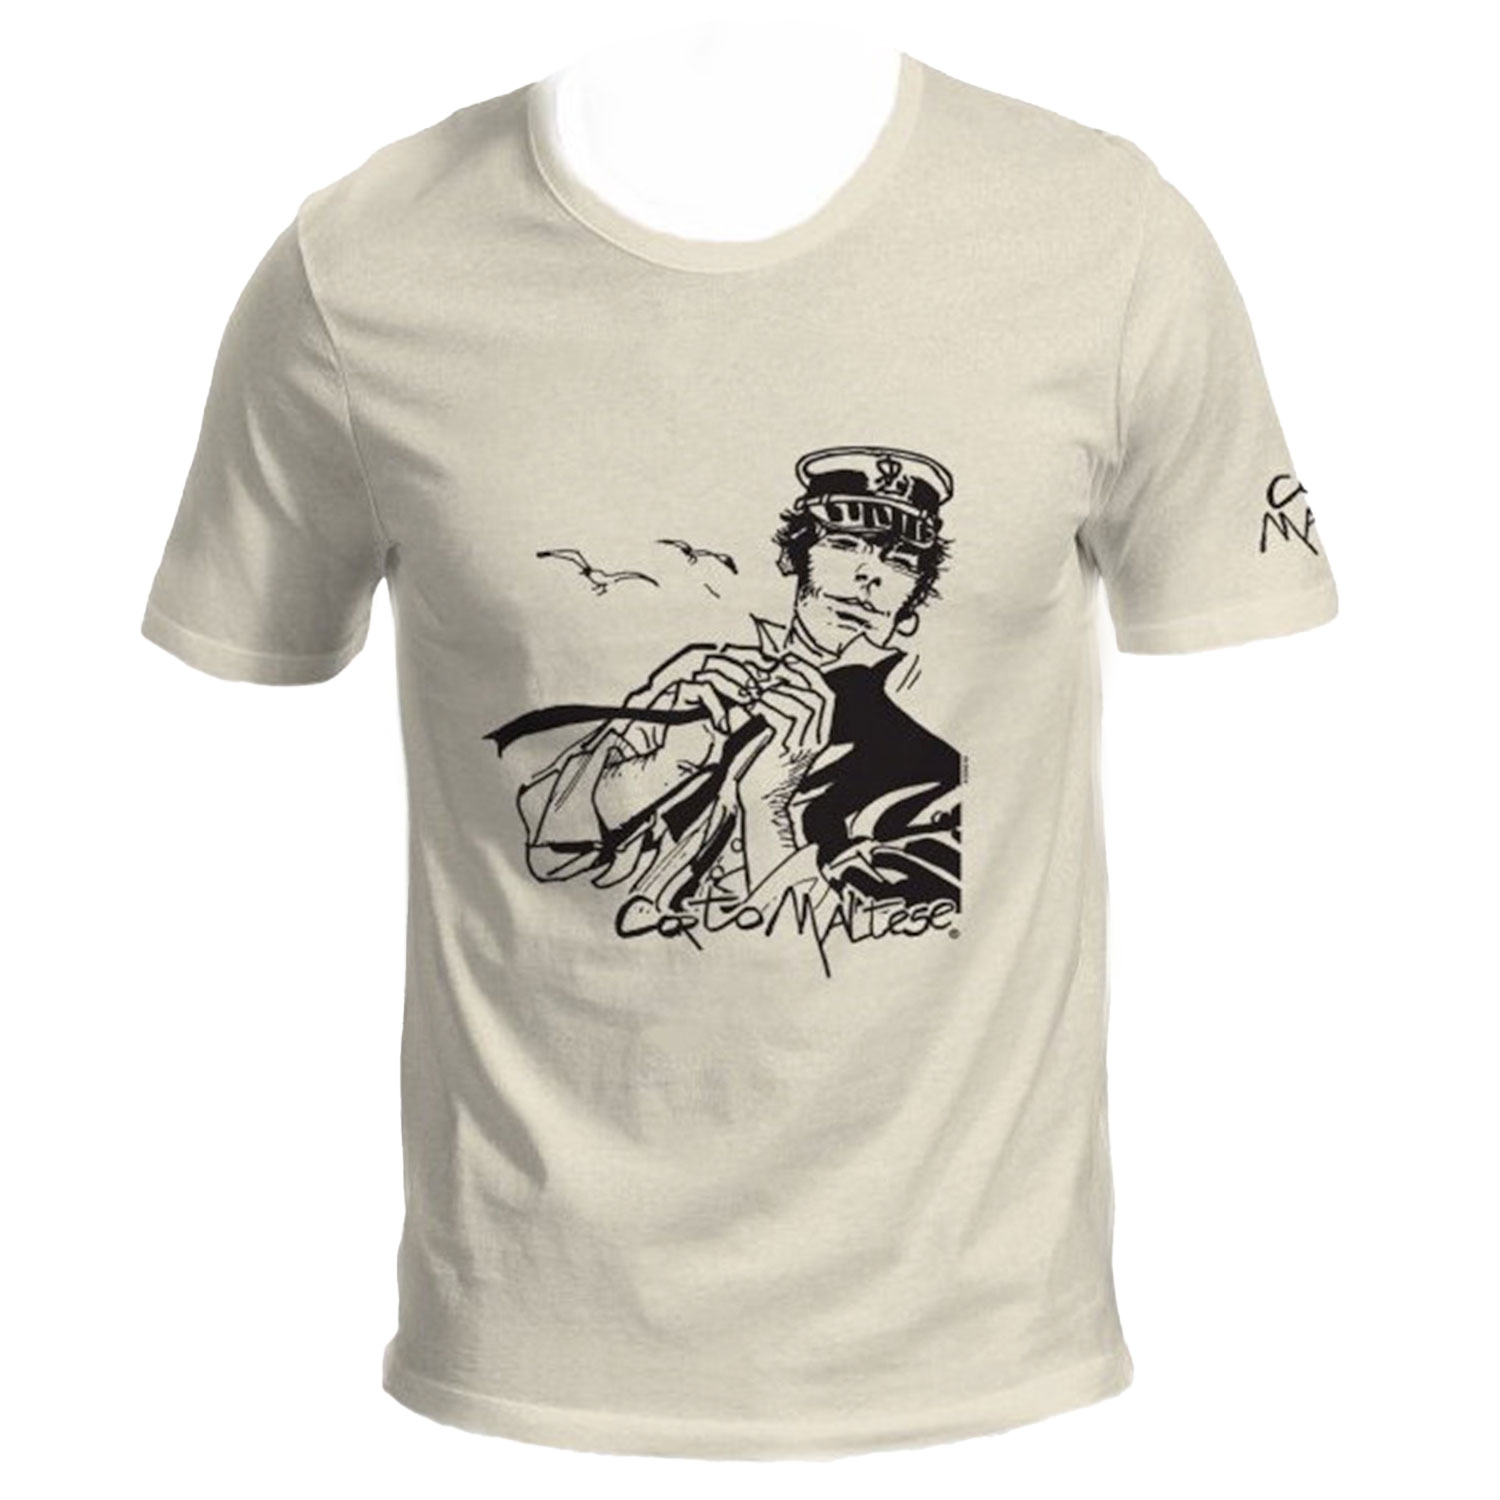 Hugo Pratt T-shirt : Corto Maltese in the wind - Ecru - Size S